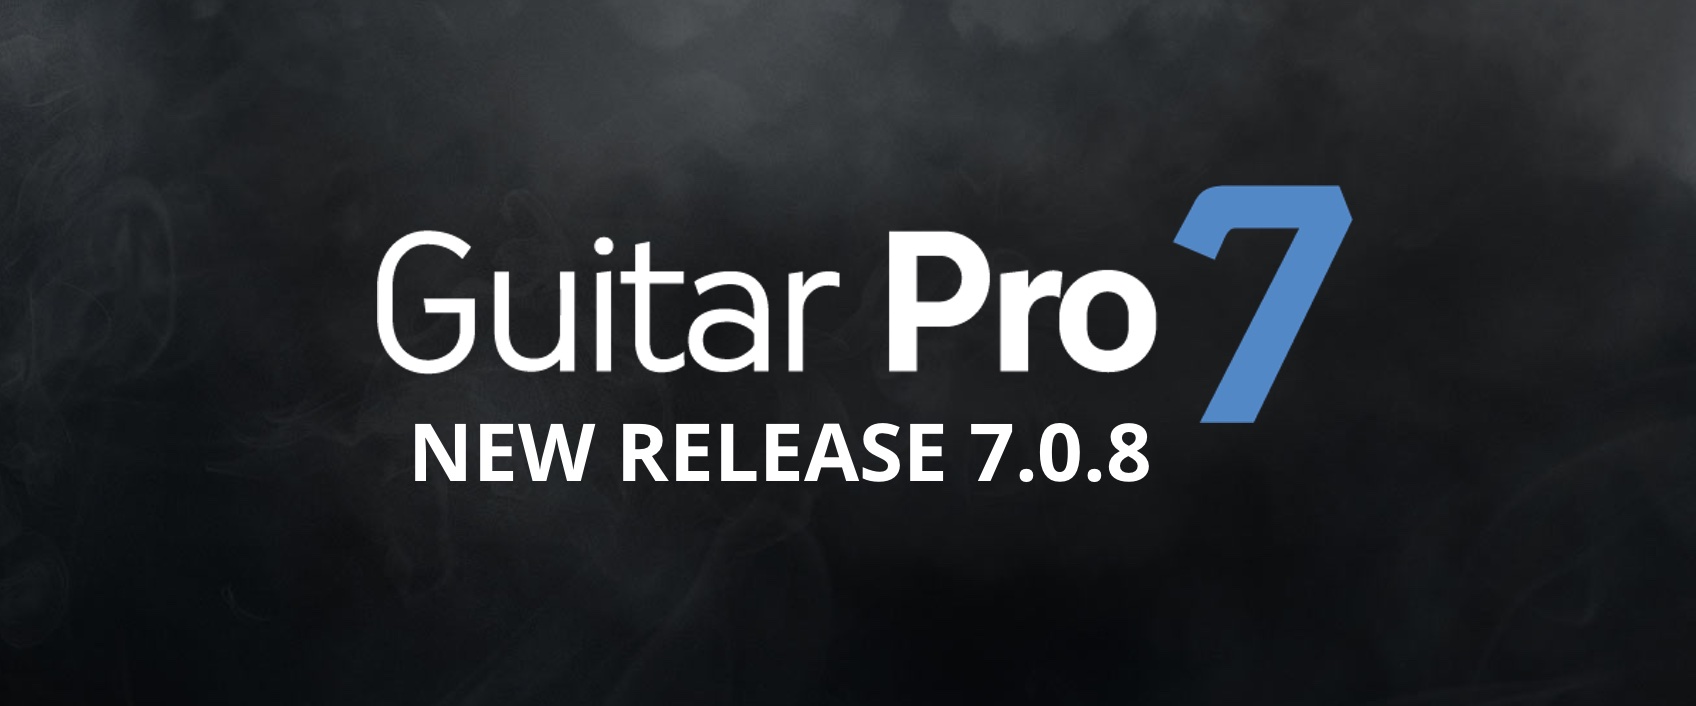 guitar pro 7 download apk